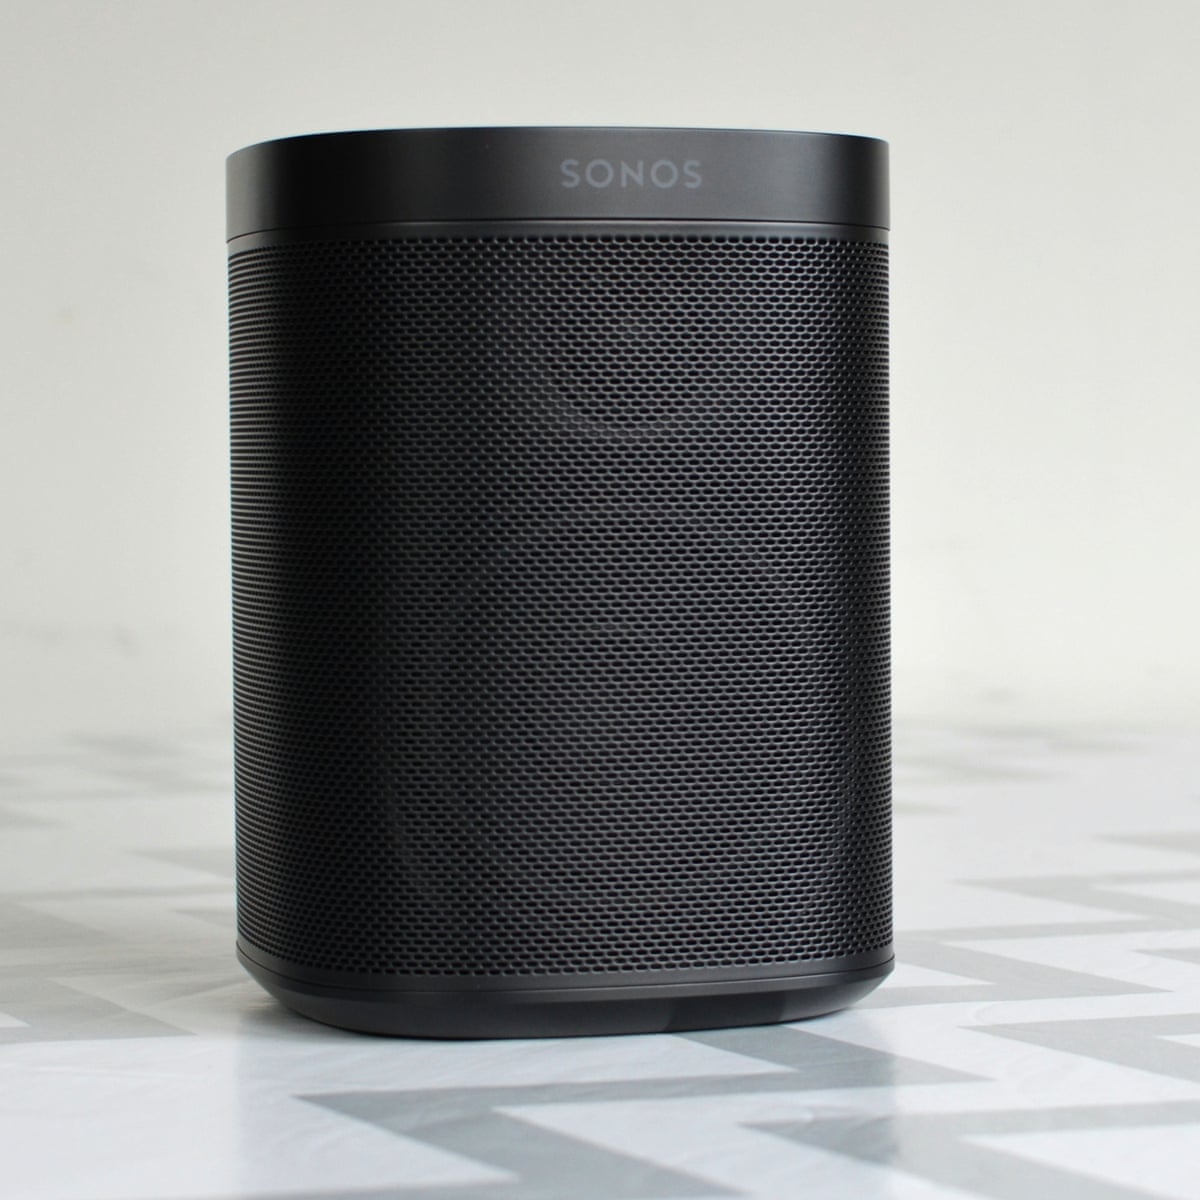 Sonos One best smart speaker for audiophiles | speakers | The